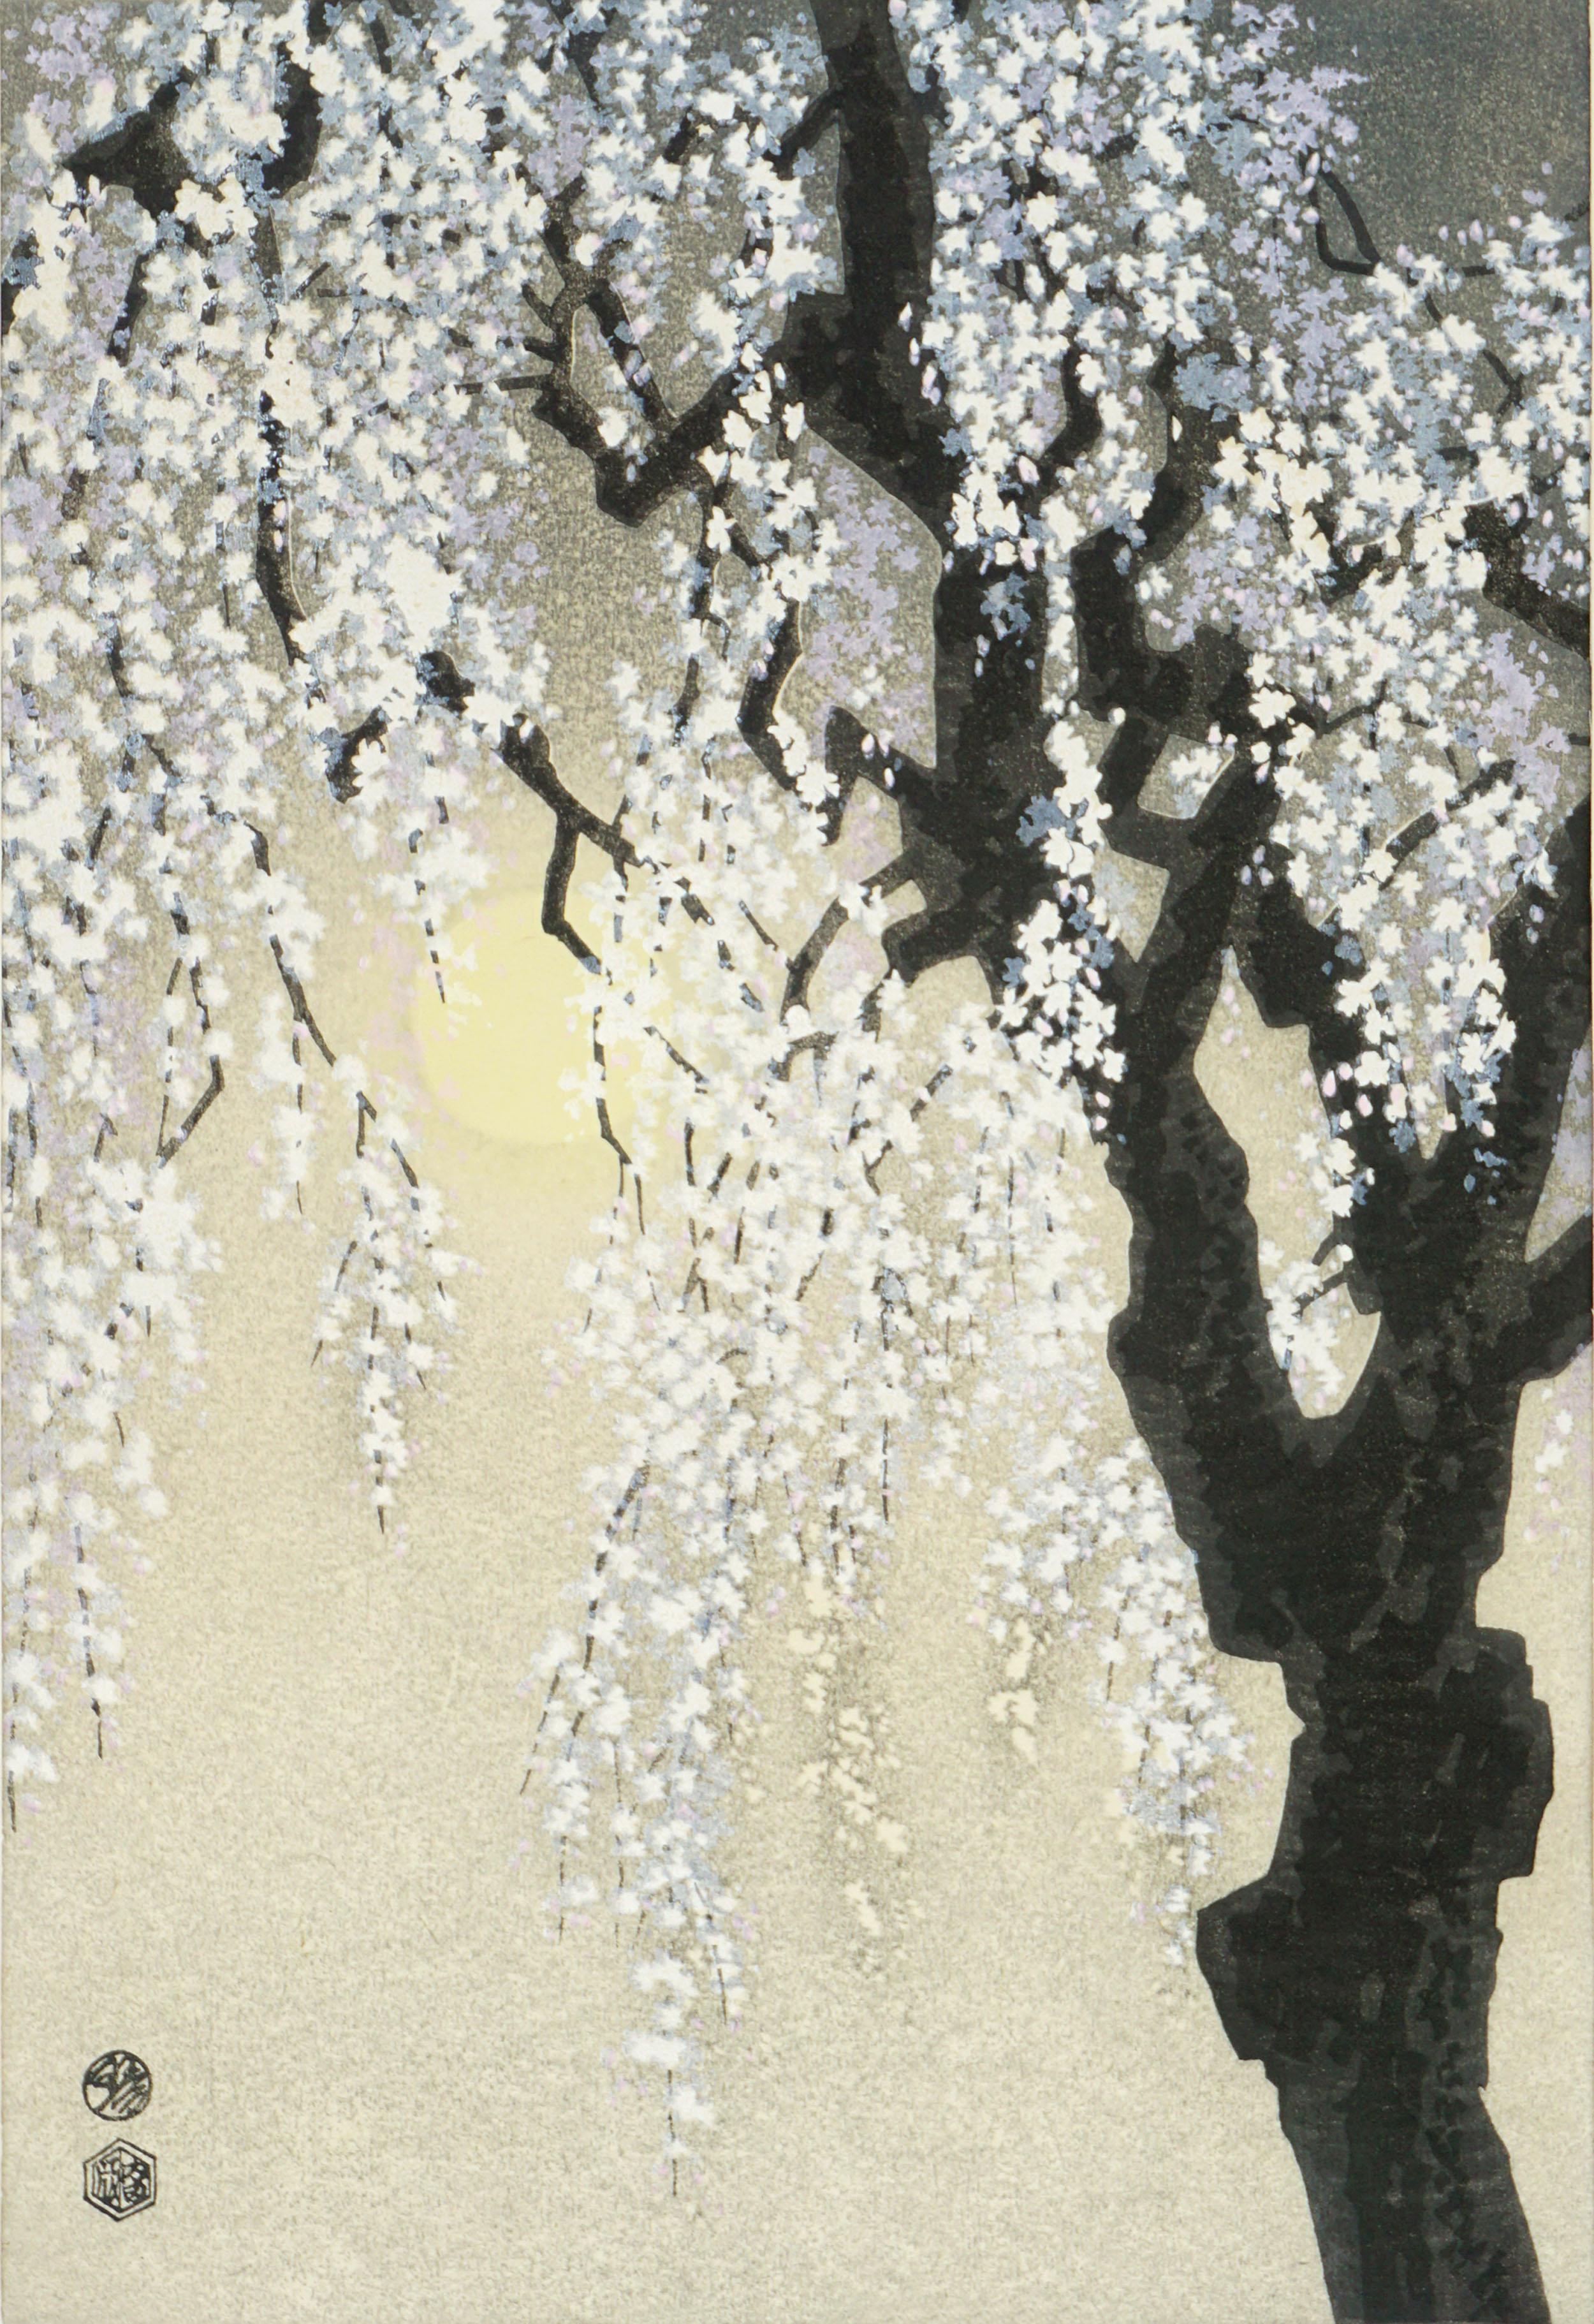 Asian Nocturnal Cherry Blossoms - Painting by Kotozuka Eiichi